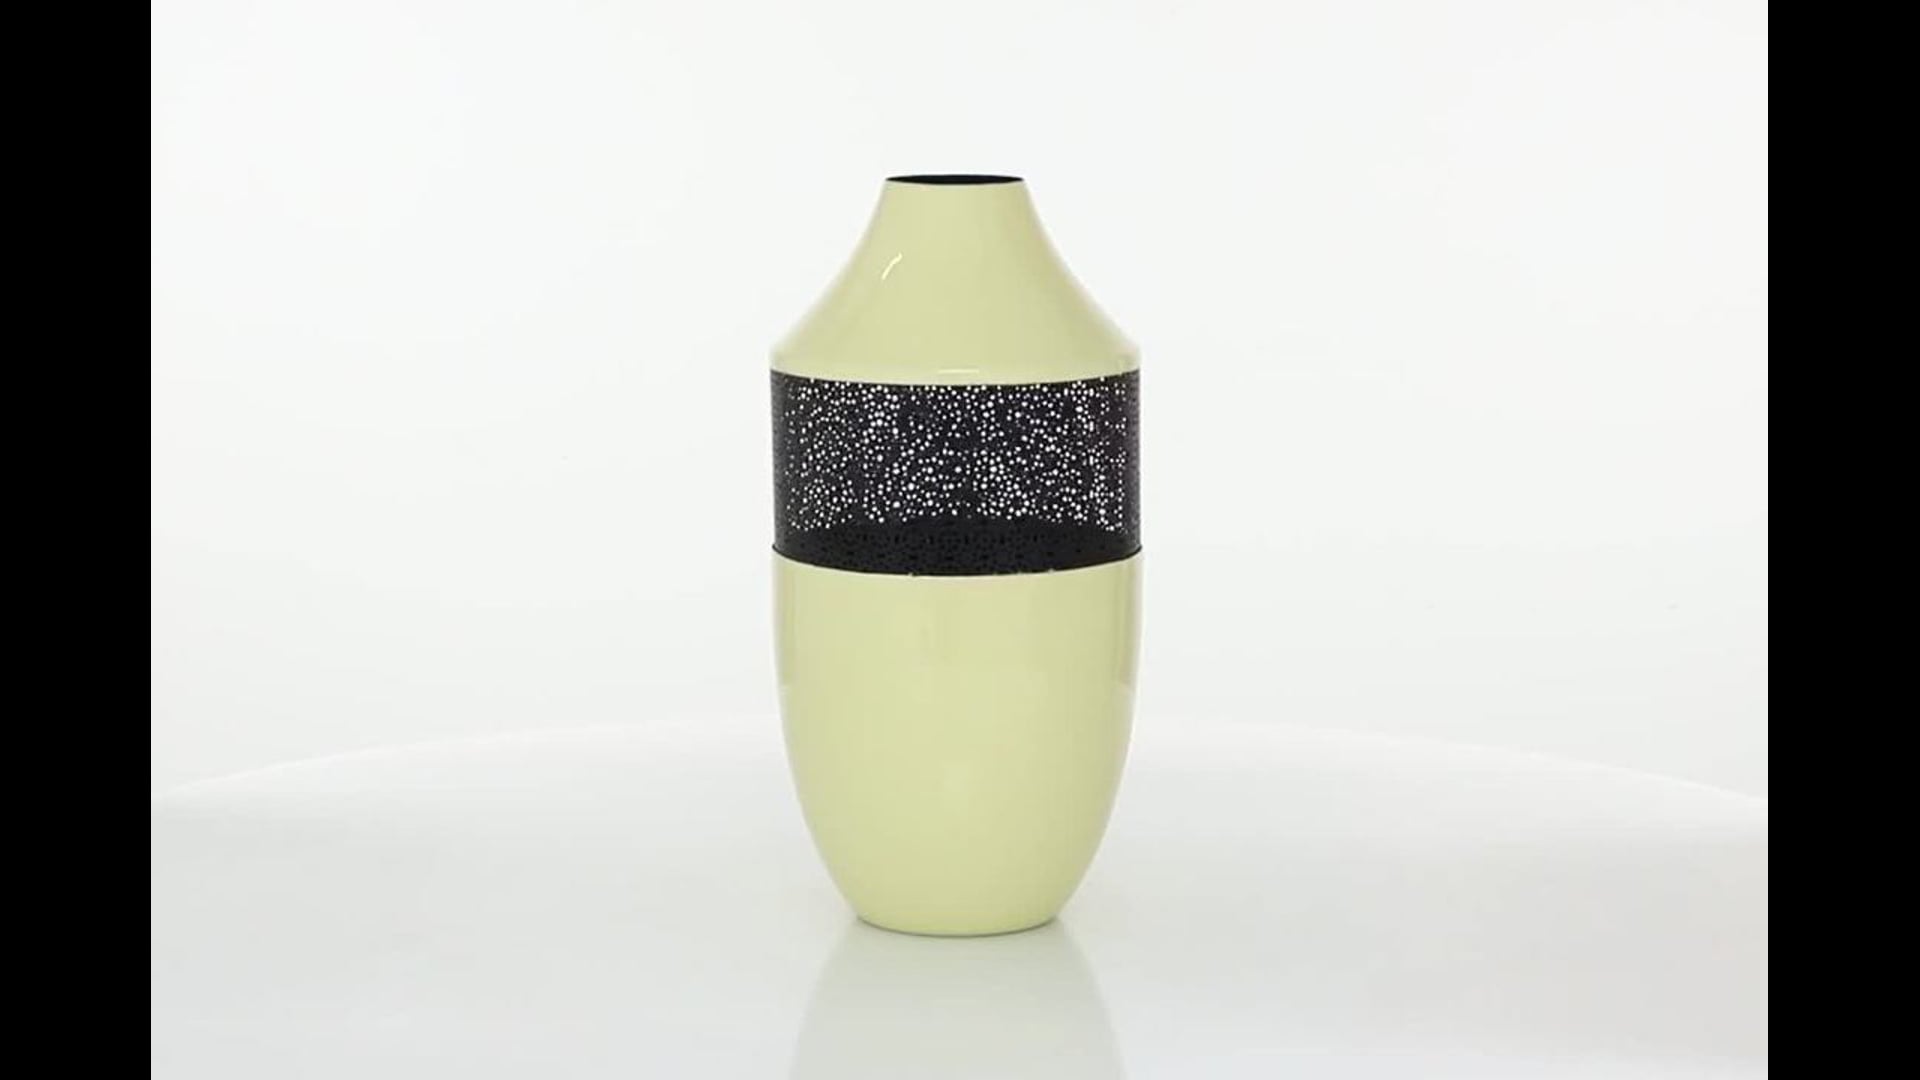 Round White Enamel Vase With Black Metal Textured Patterned Detail, 8"x16.25"